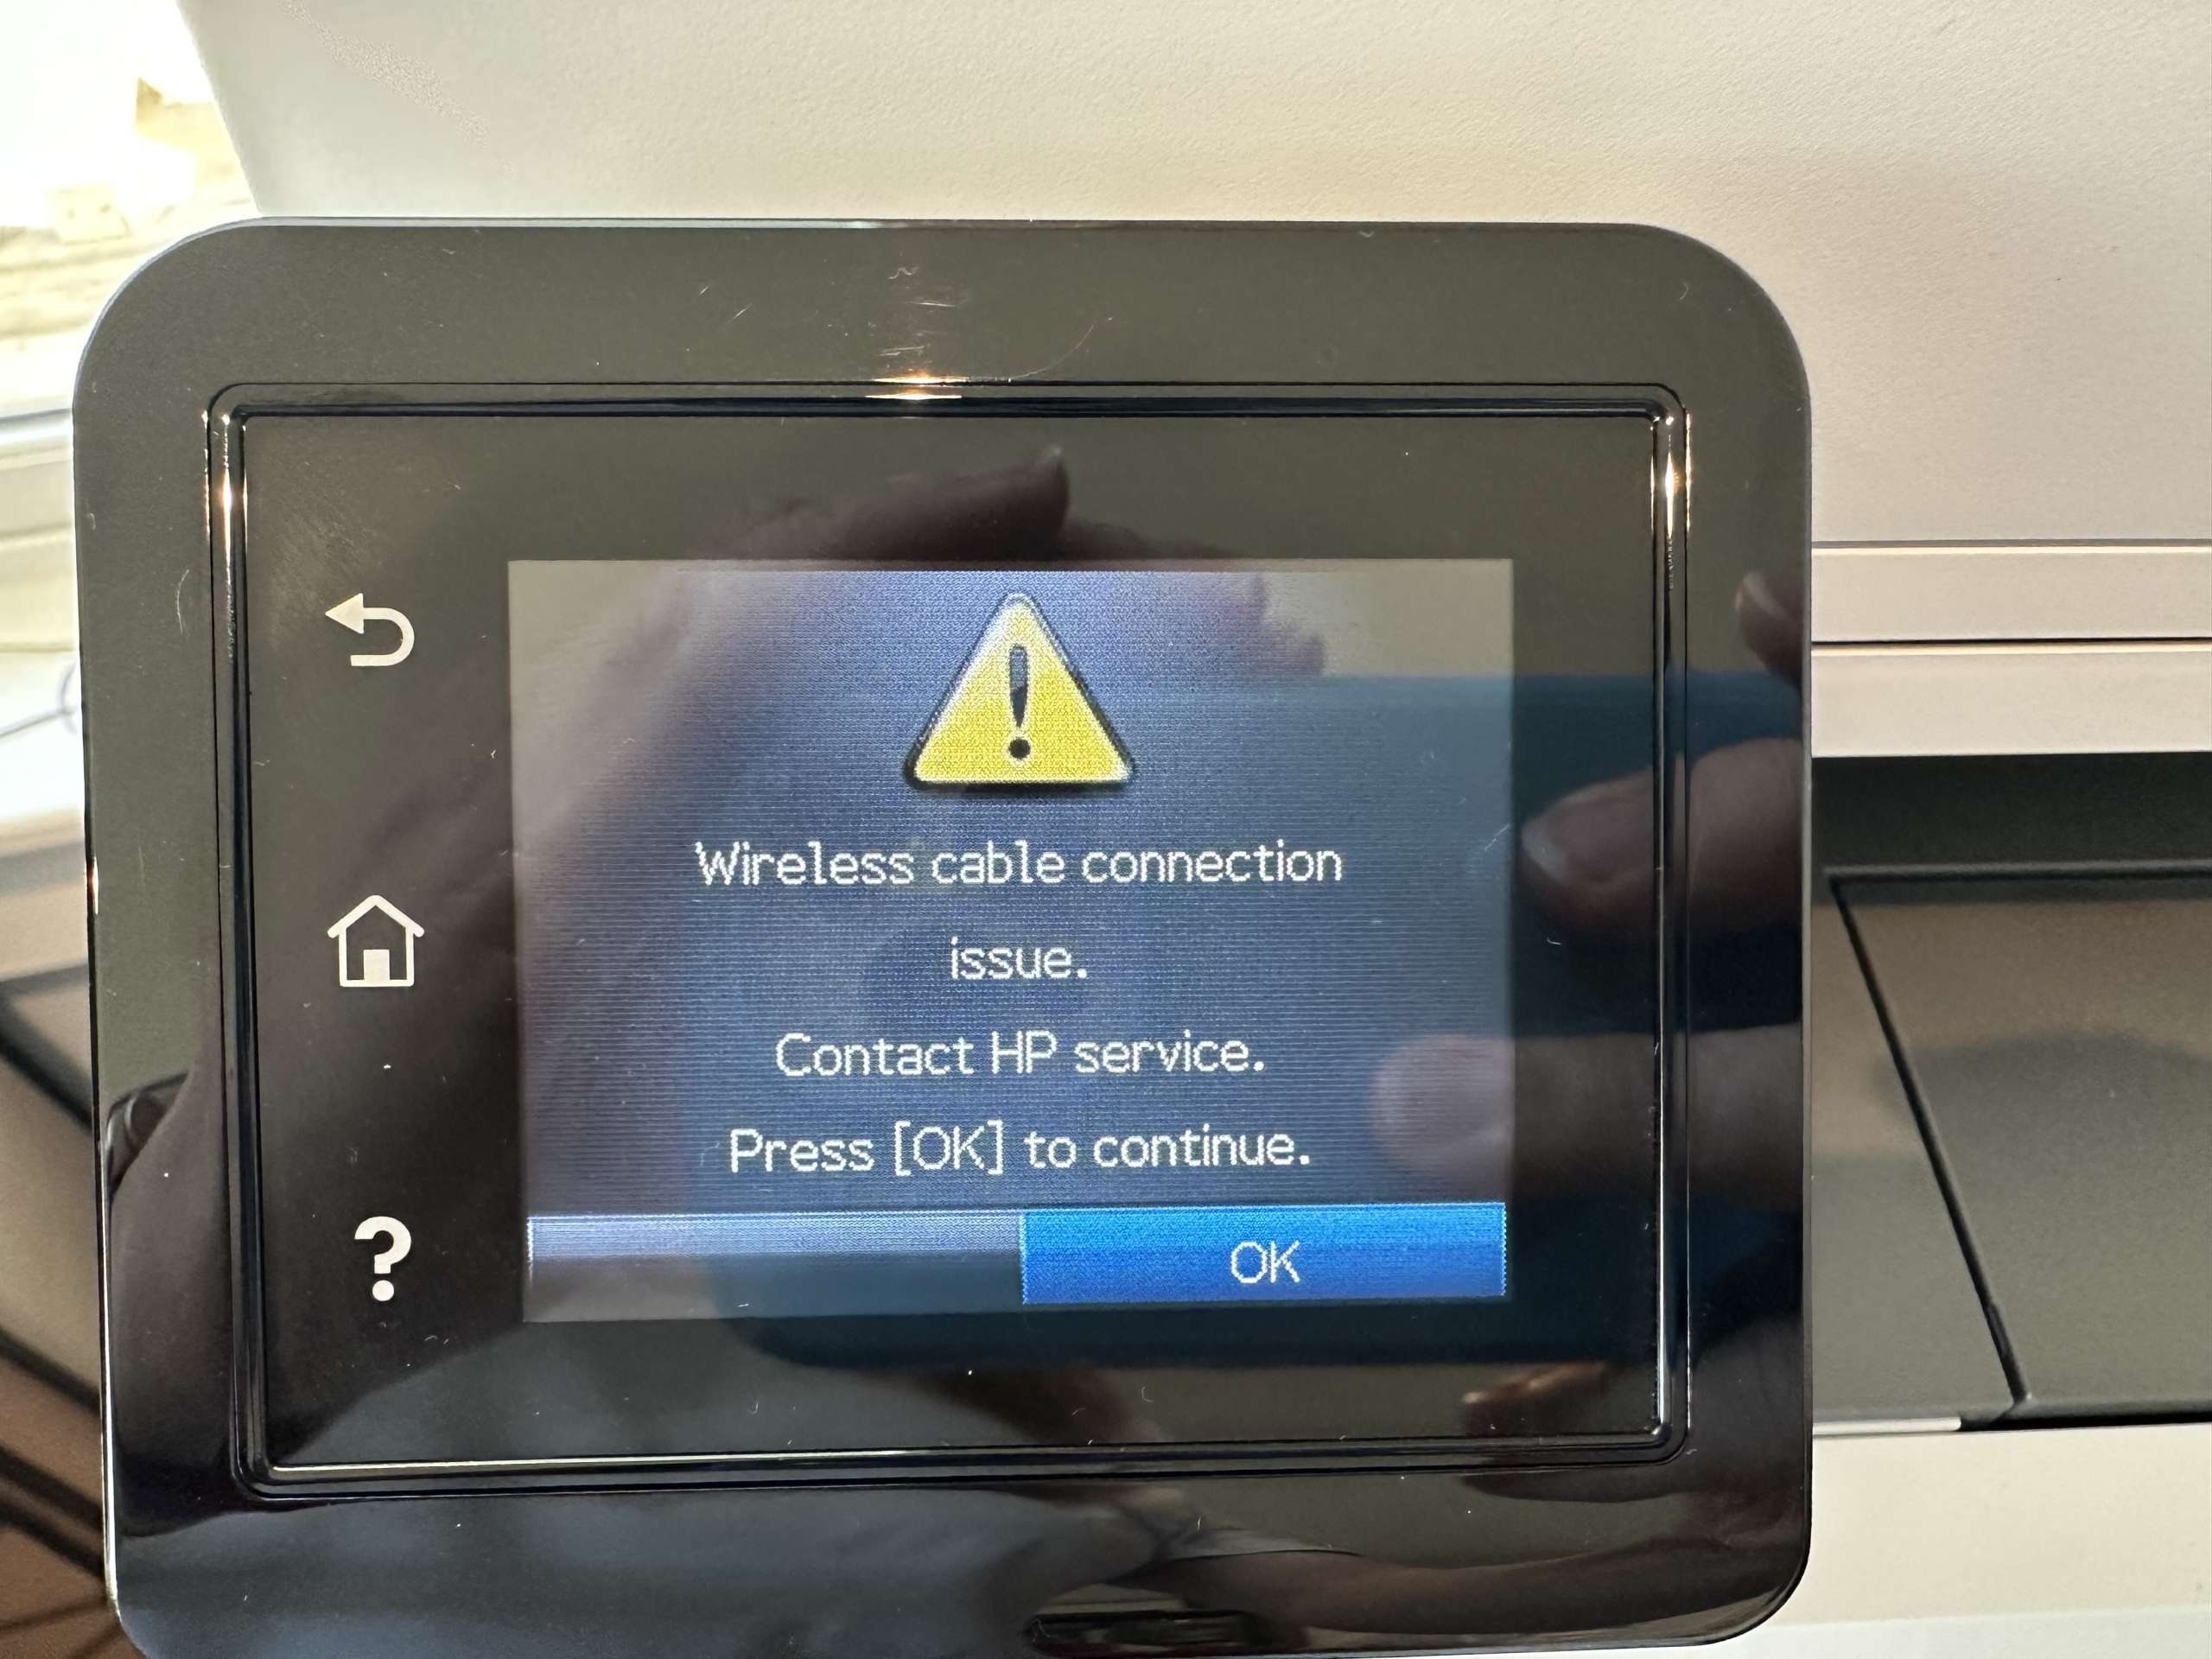 Fix Error 49 on HP Printer